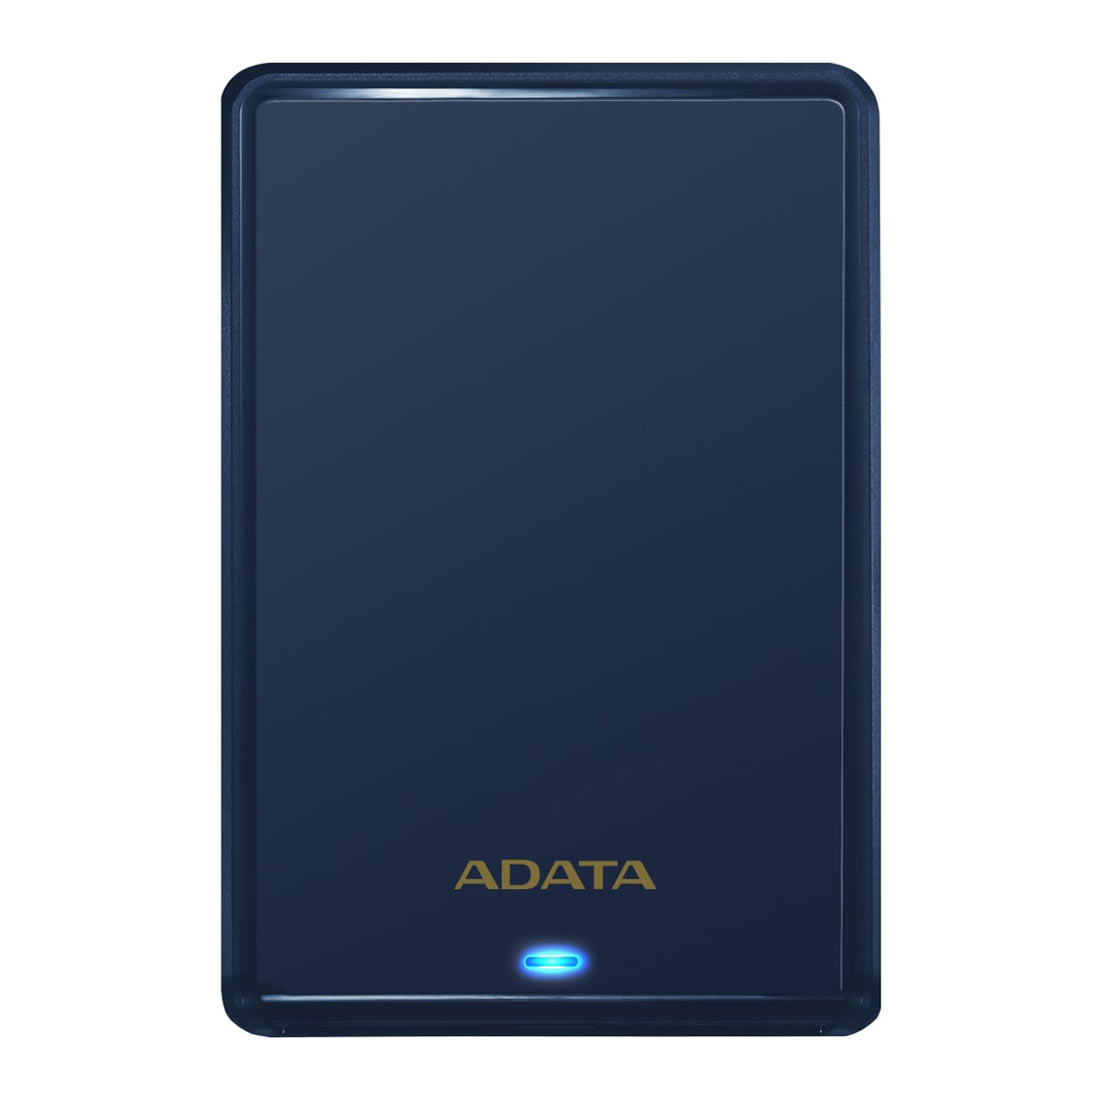 HDD EXT Adata HV620S Slim 1TB